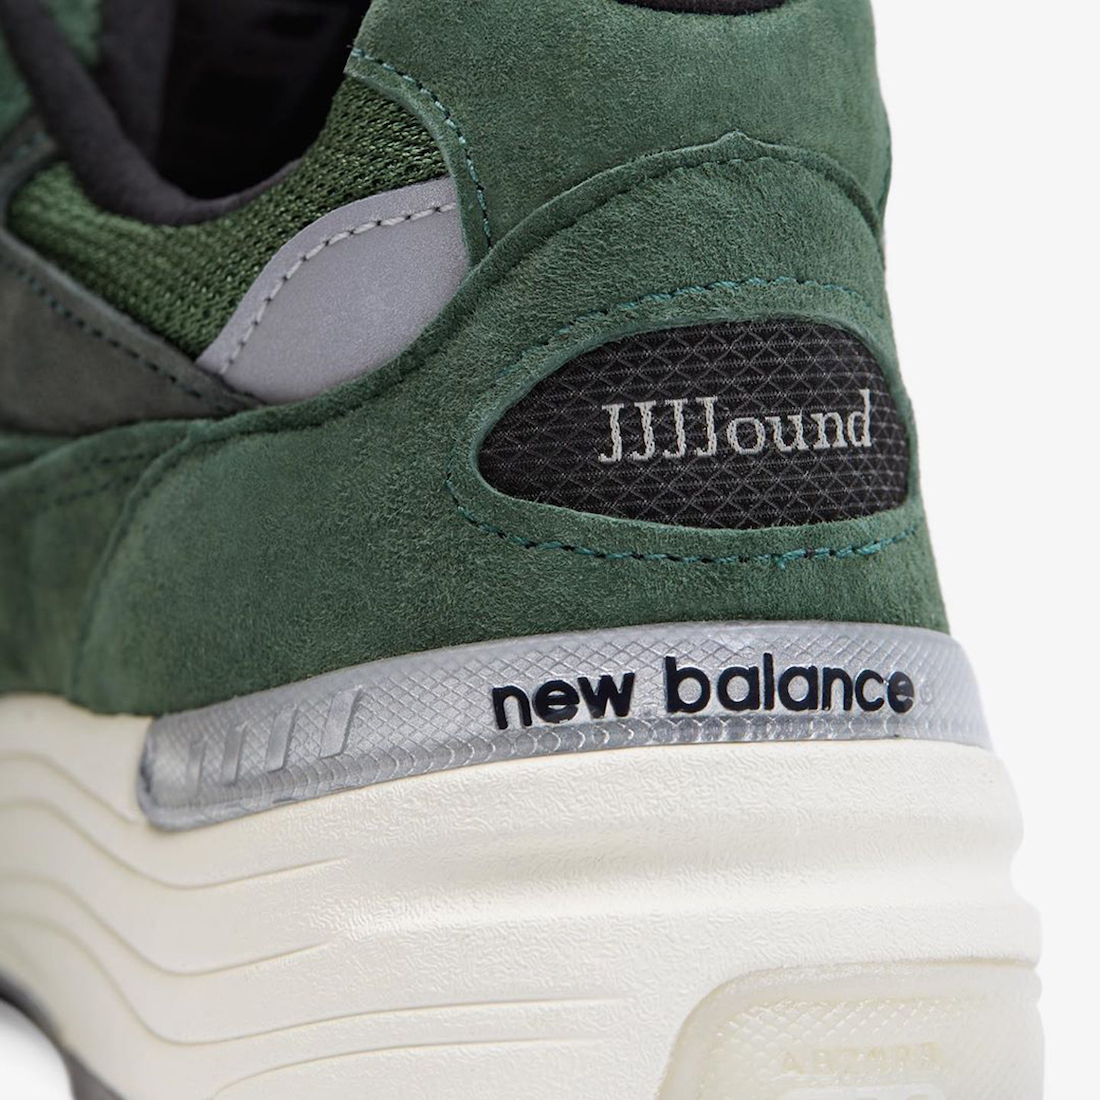 JJJJound New Balance 992 Release Date - Sneaker Bar Detroit